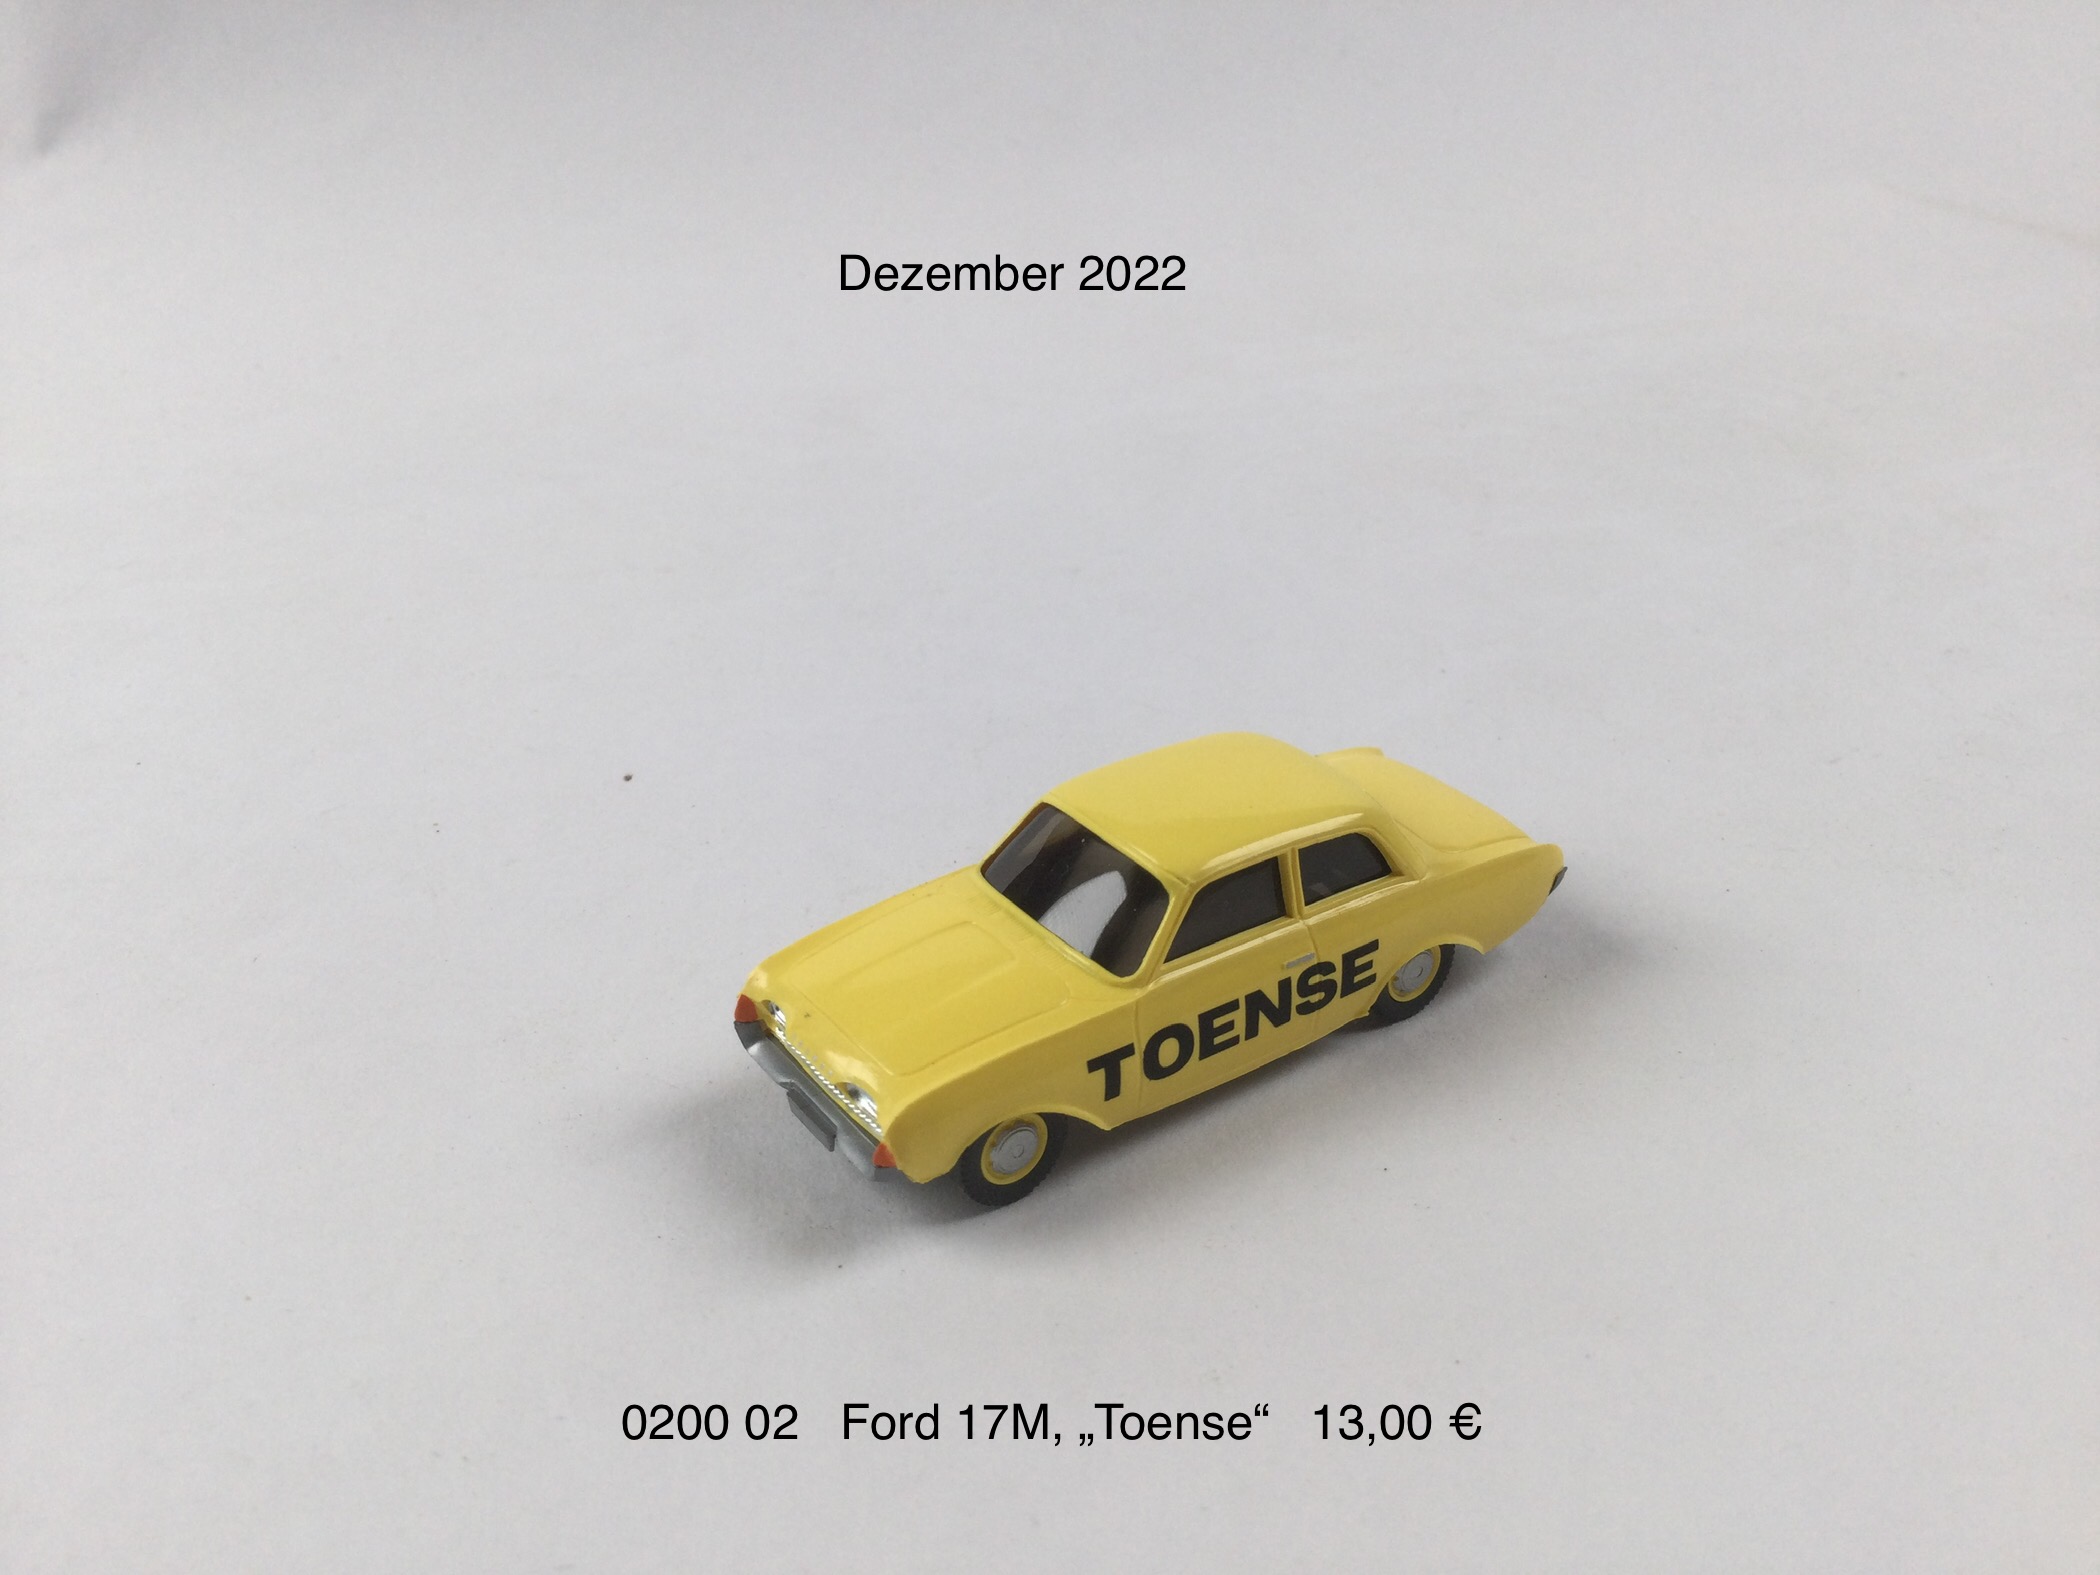 Ford 17M "Toense"